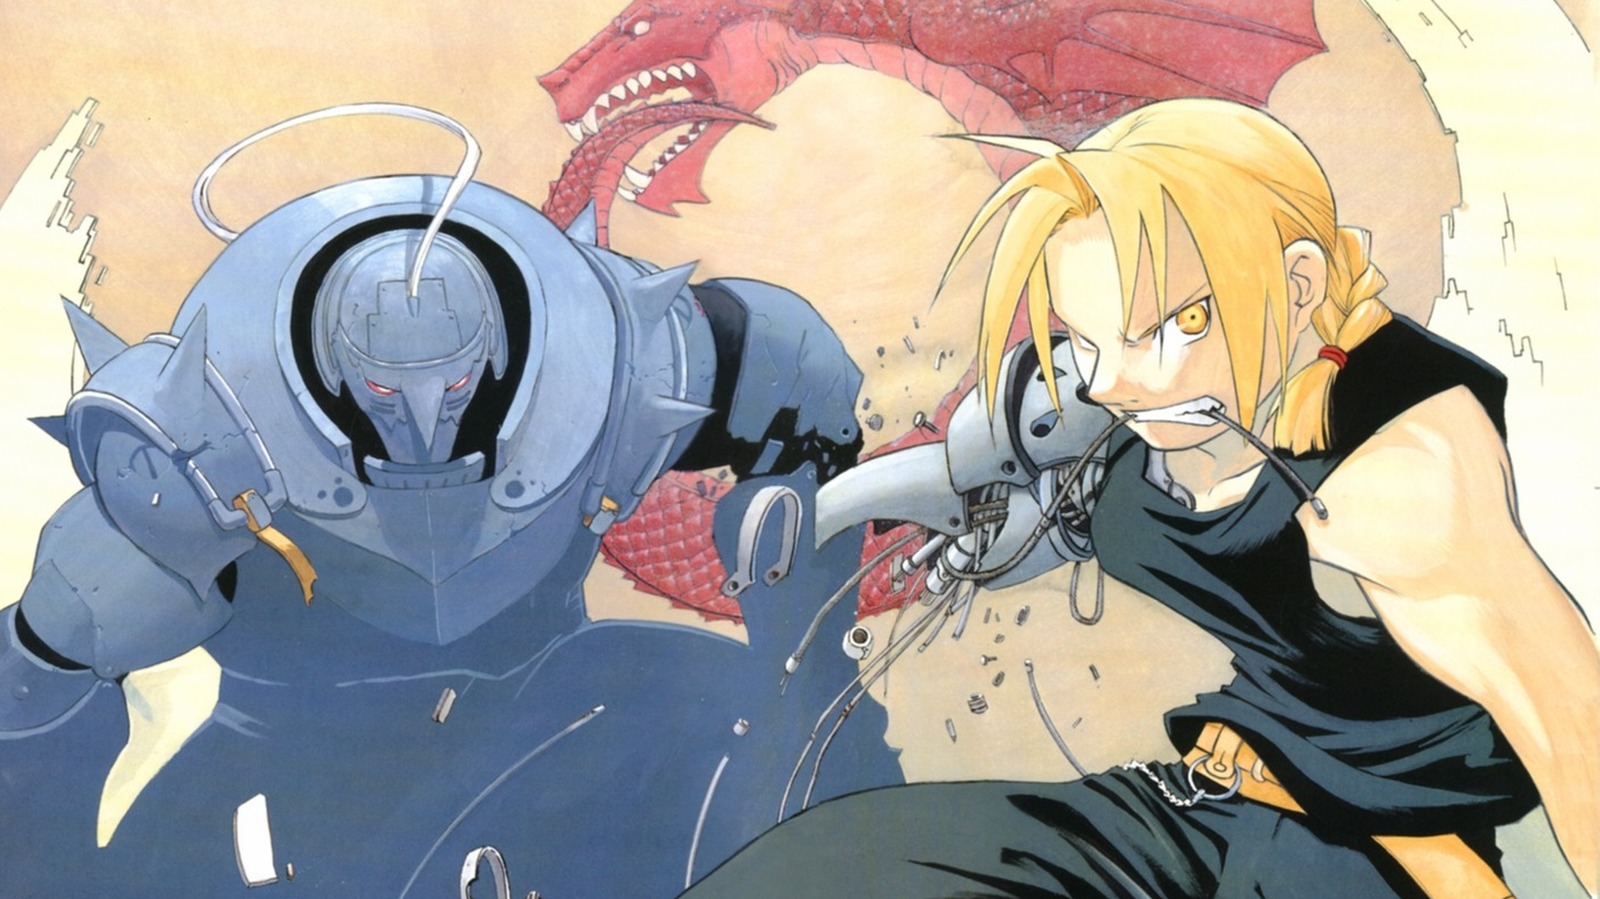 Epic manga fight scene from full metal alchemist